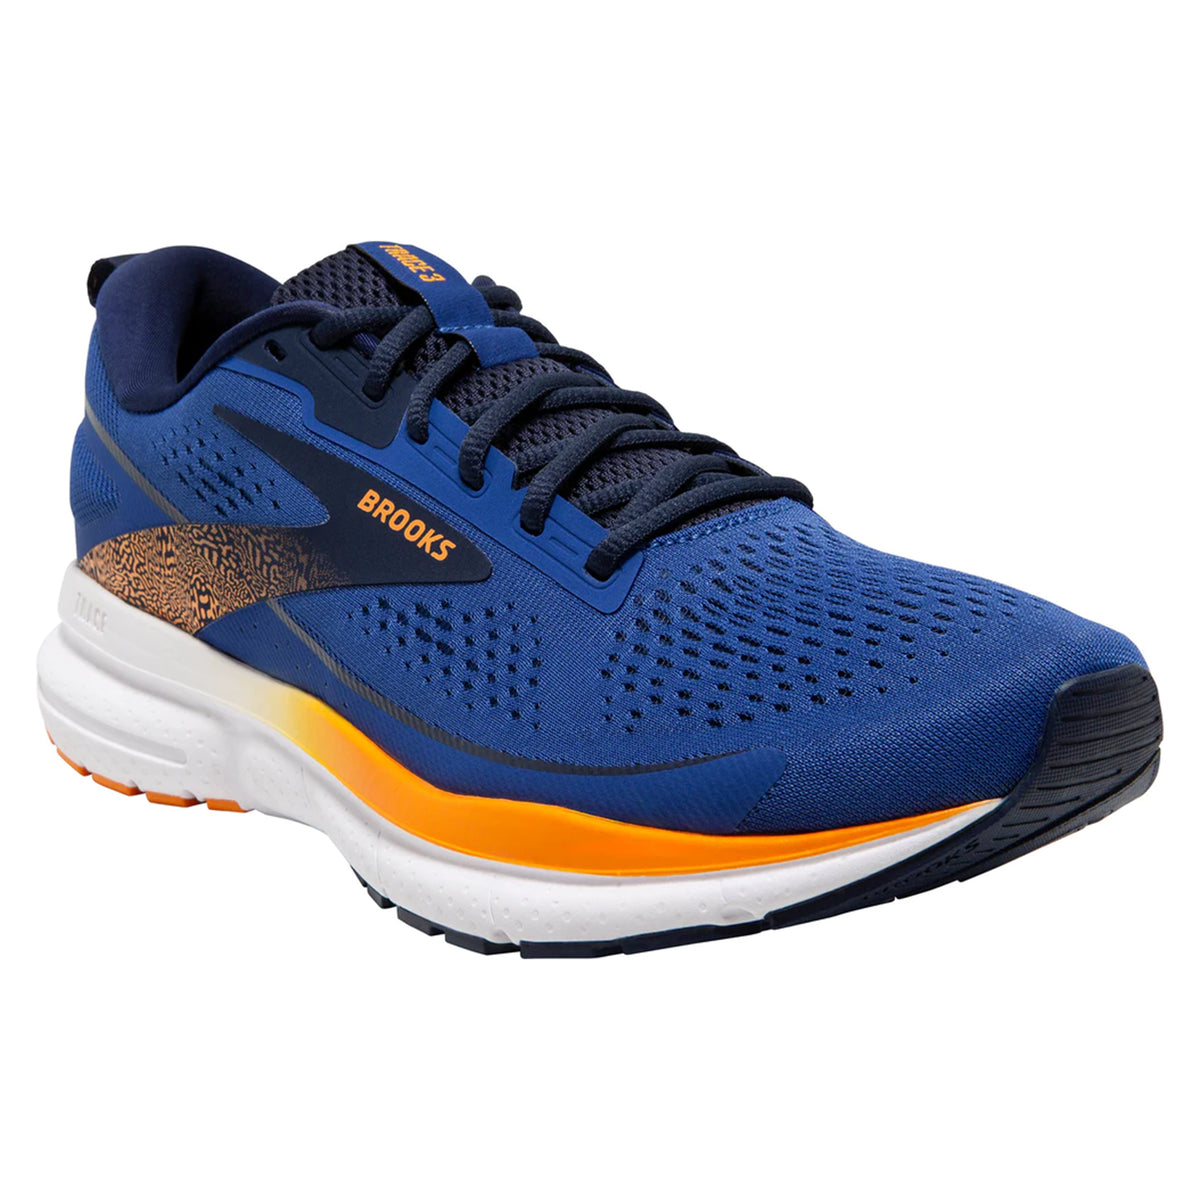 Brooks Trace 3 Mens Running Shoes: Blue/Peacoat/Orange